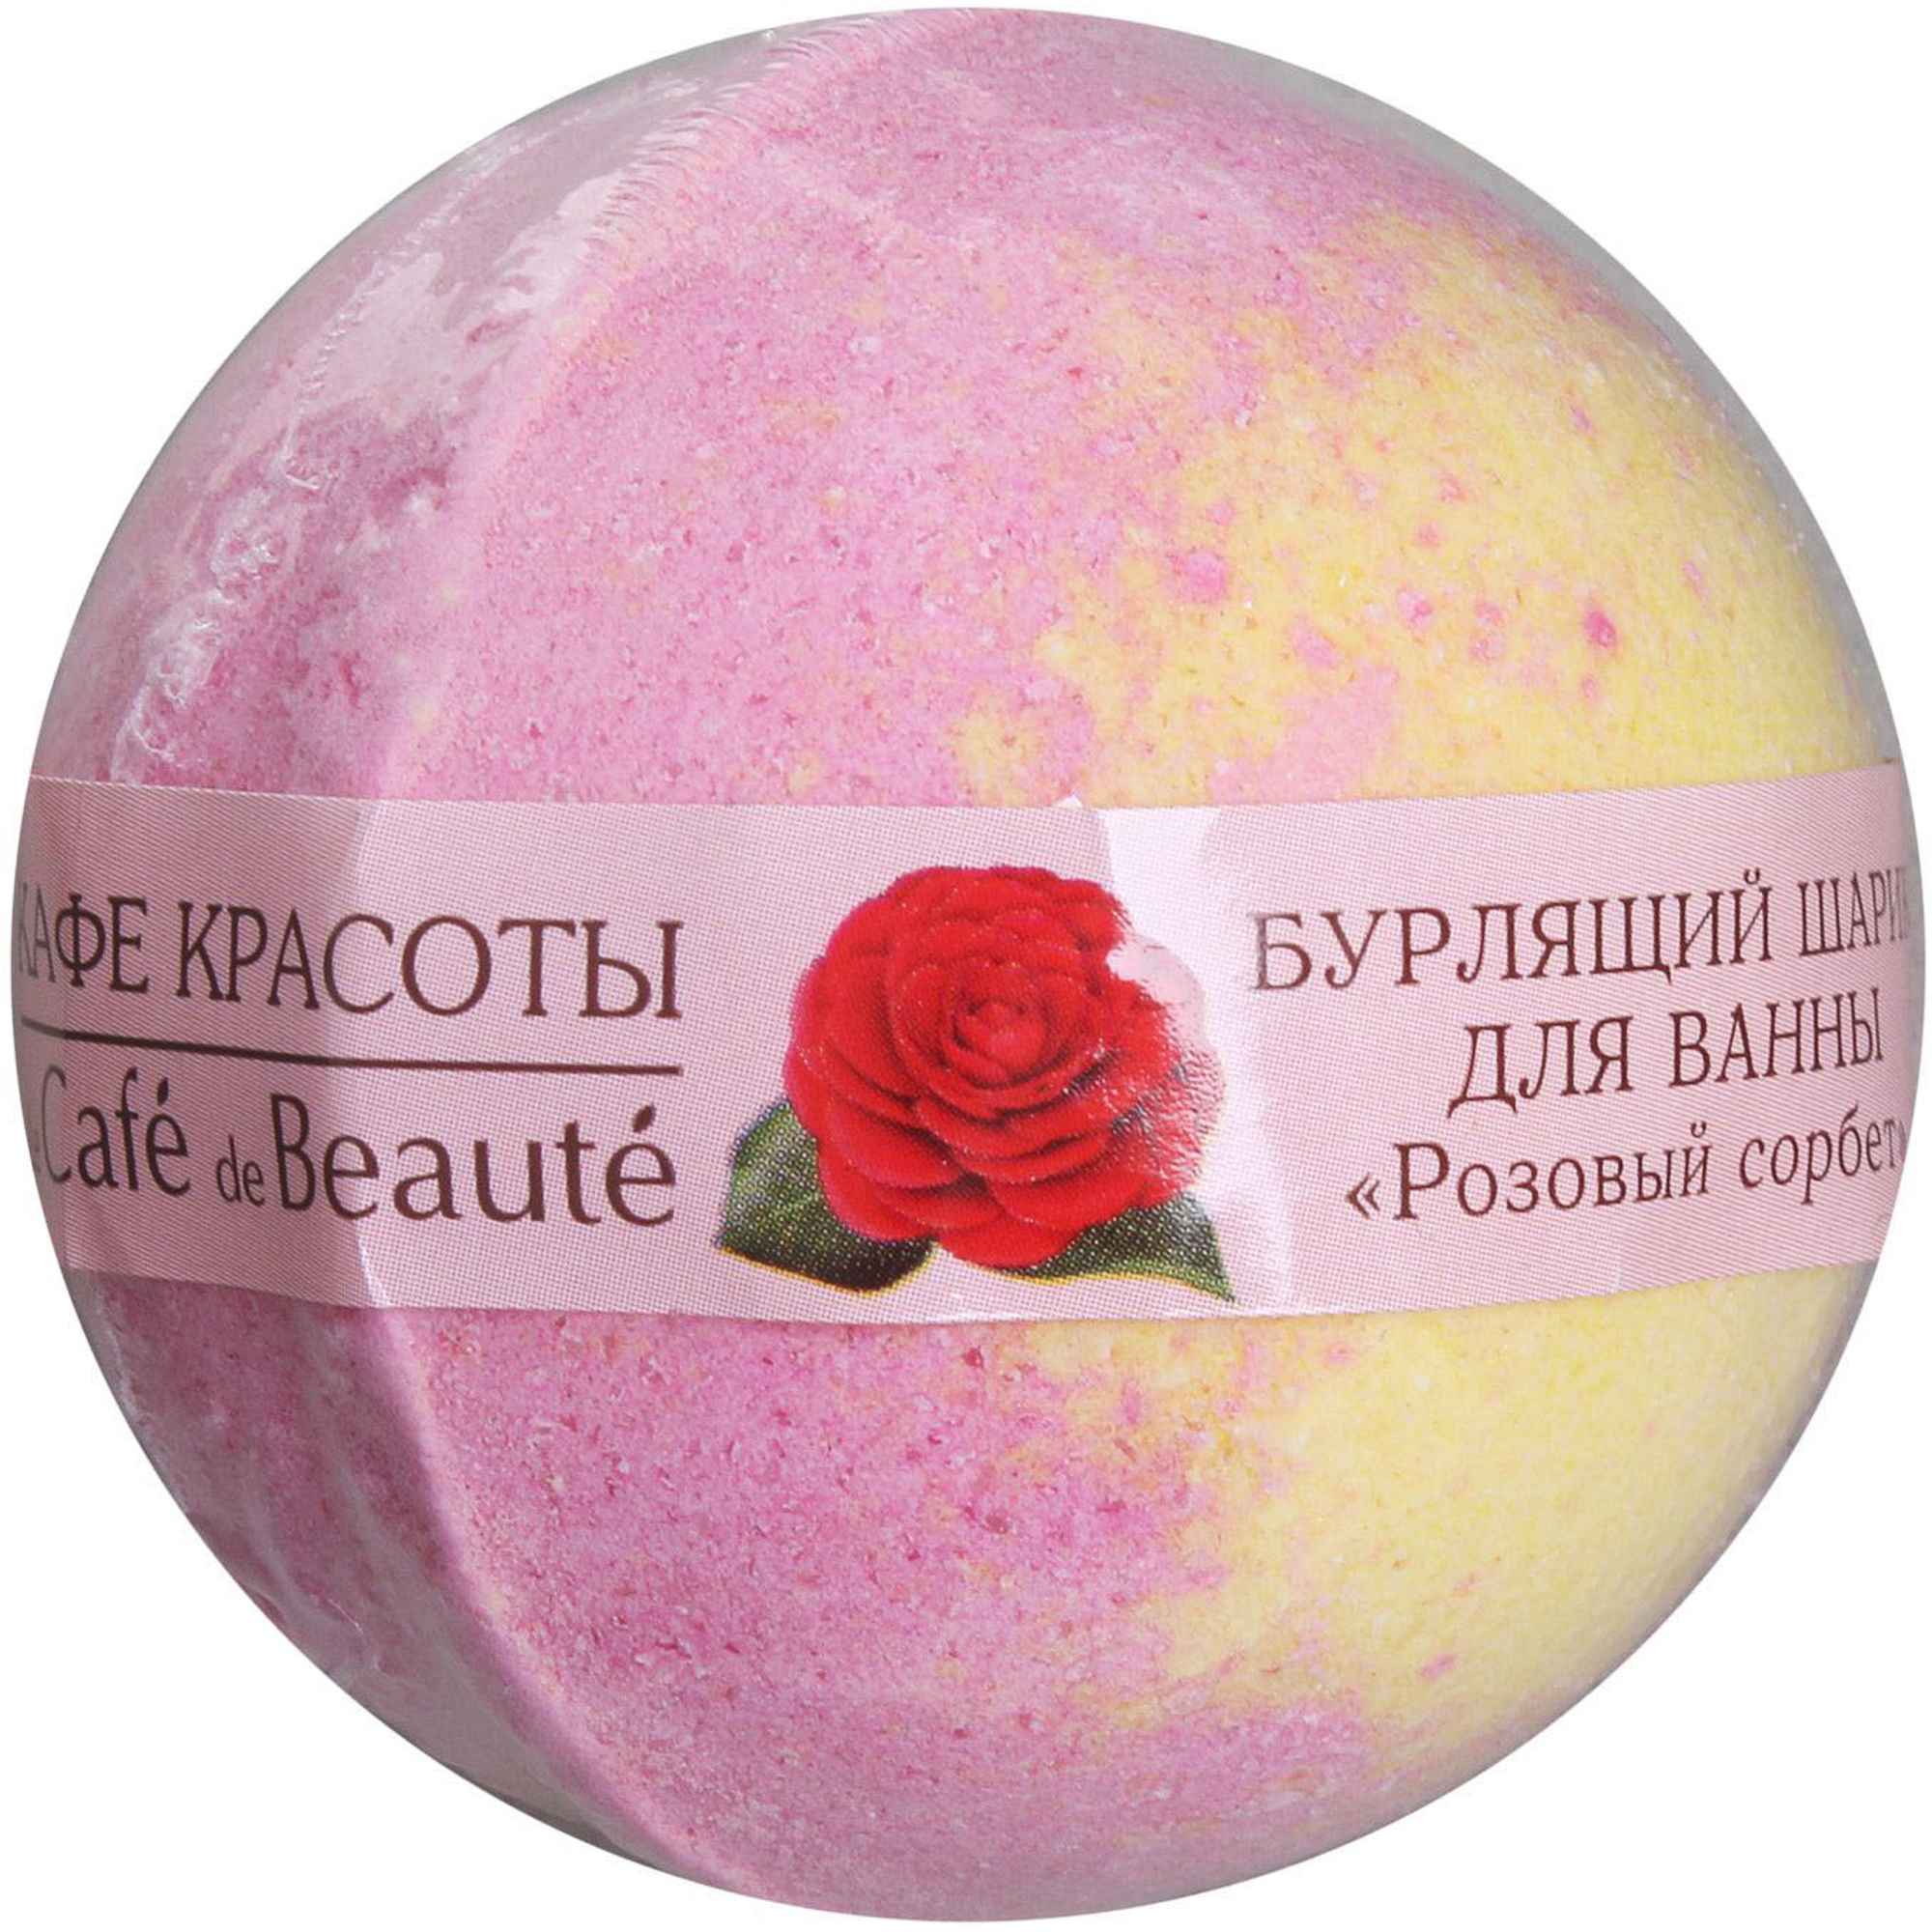 Шар для ванны Кафе Красоты Розовый сорбет 120 г бурлящий шар для ванны бергамот и грейпфрут 120 г кафе красоты